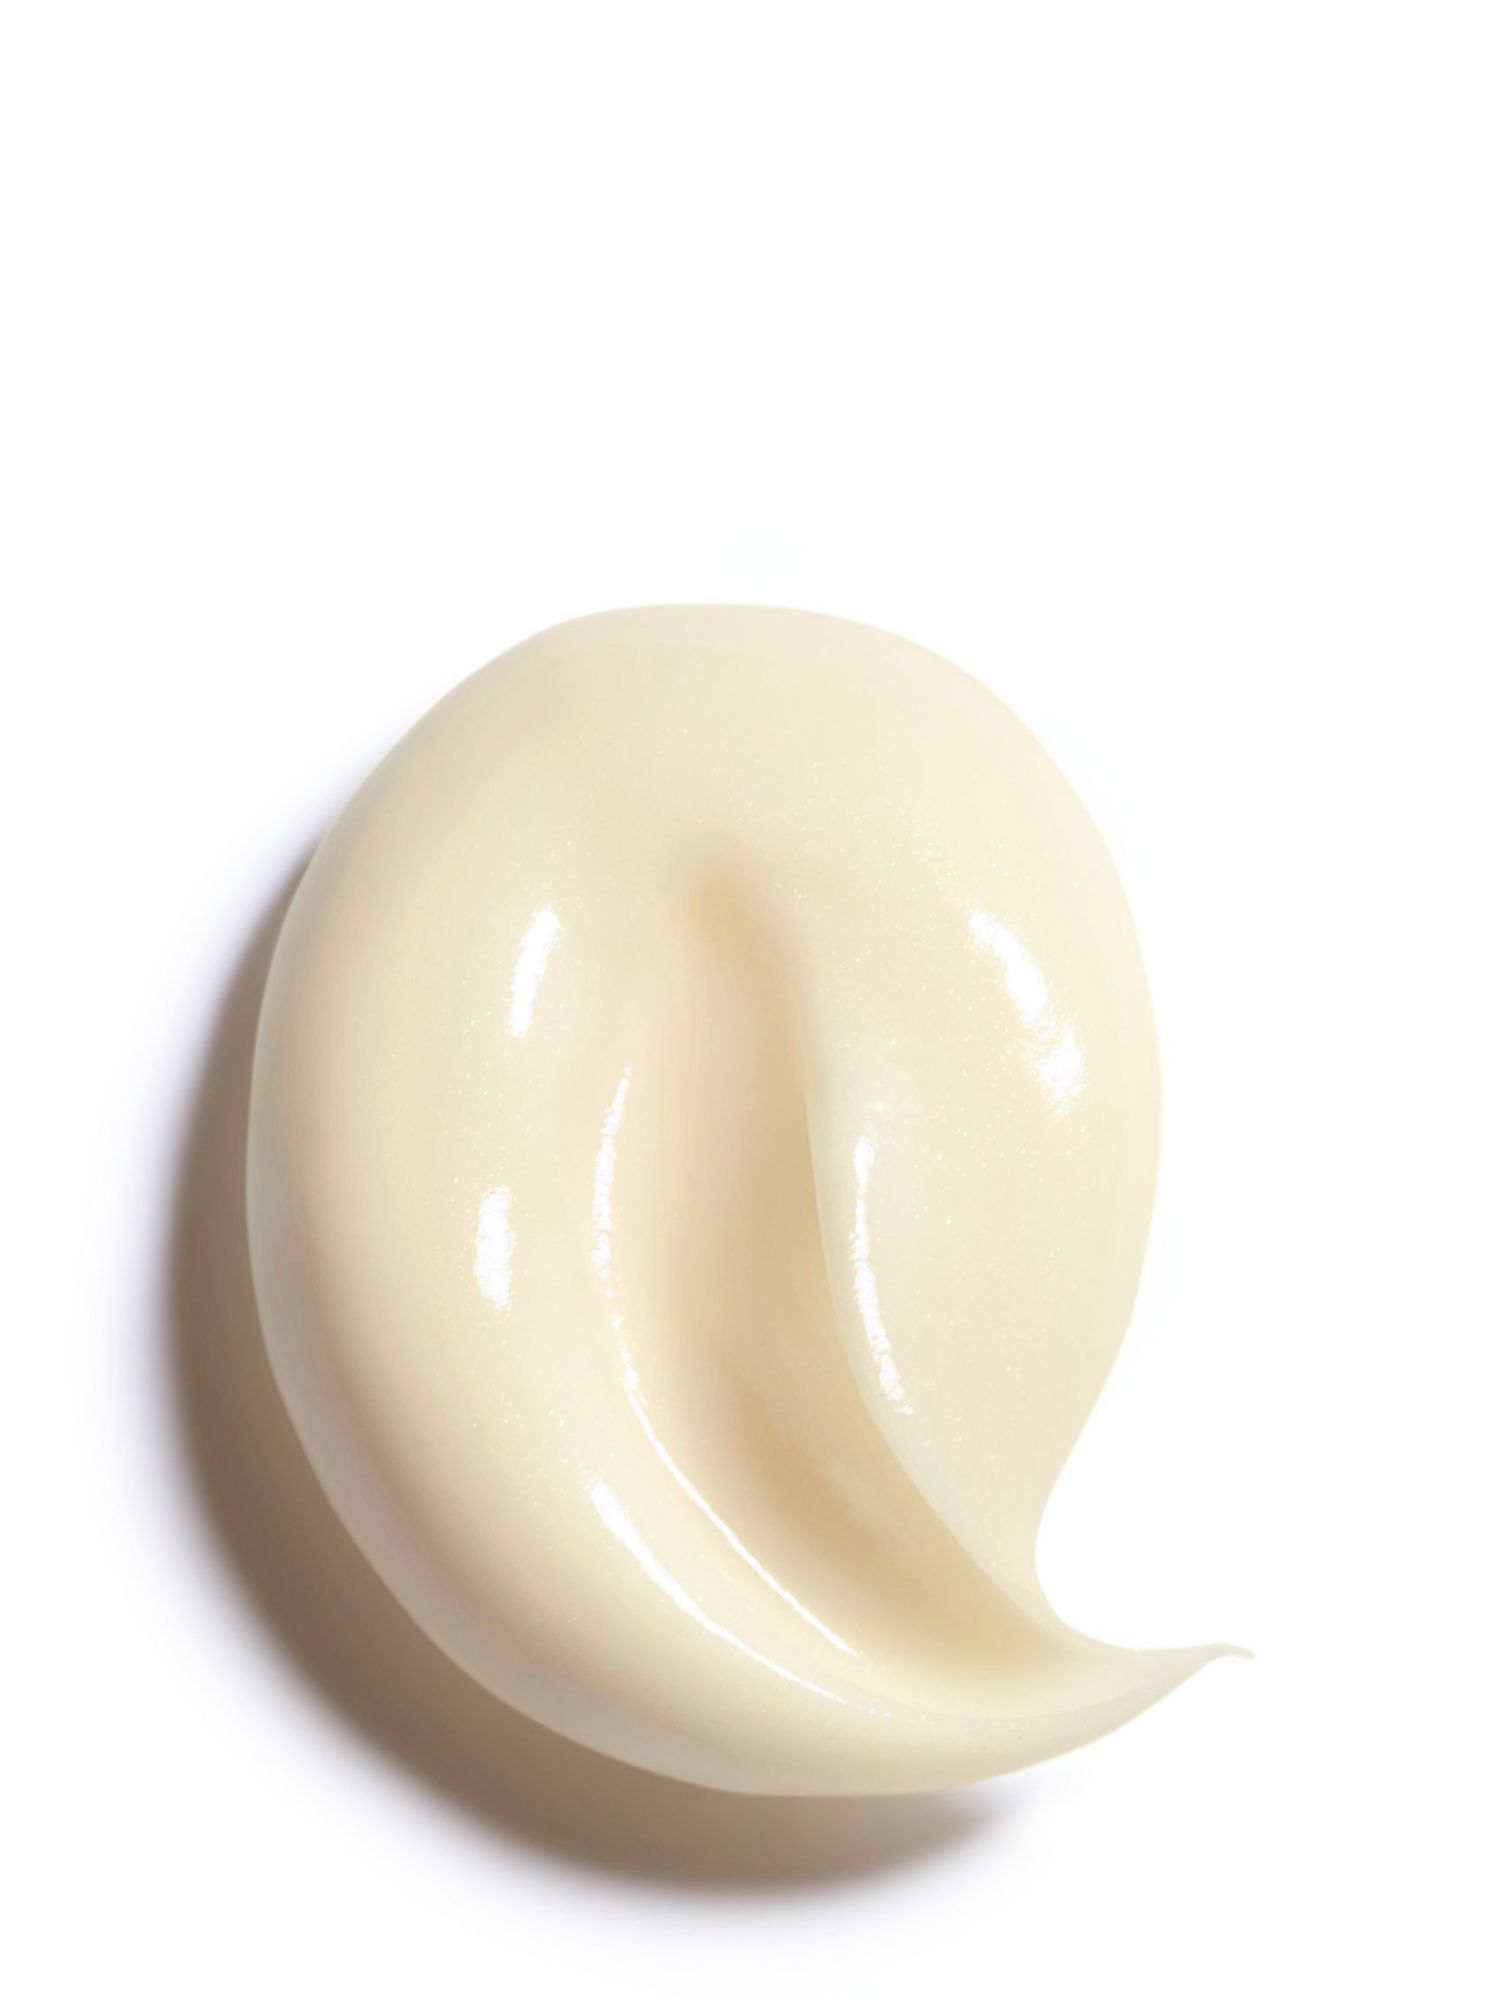 Chanel Sublimage eye cream review - Lauren Grace Harding